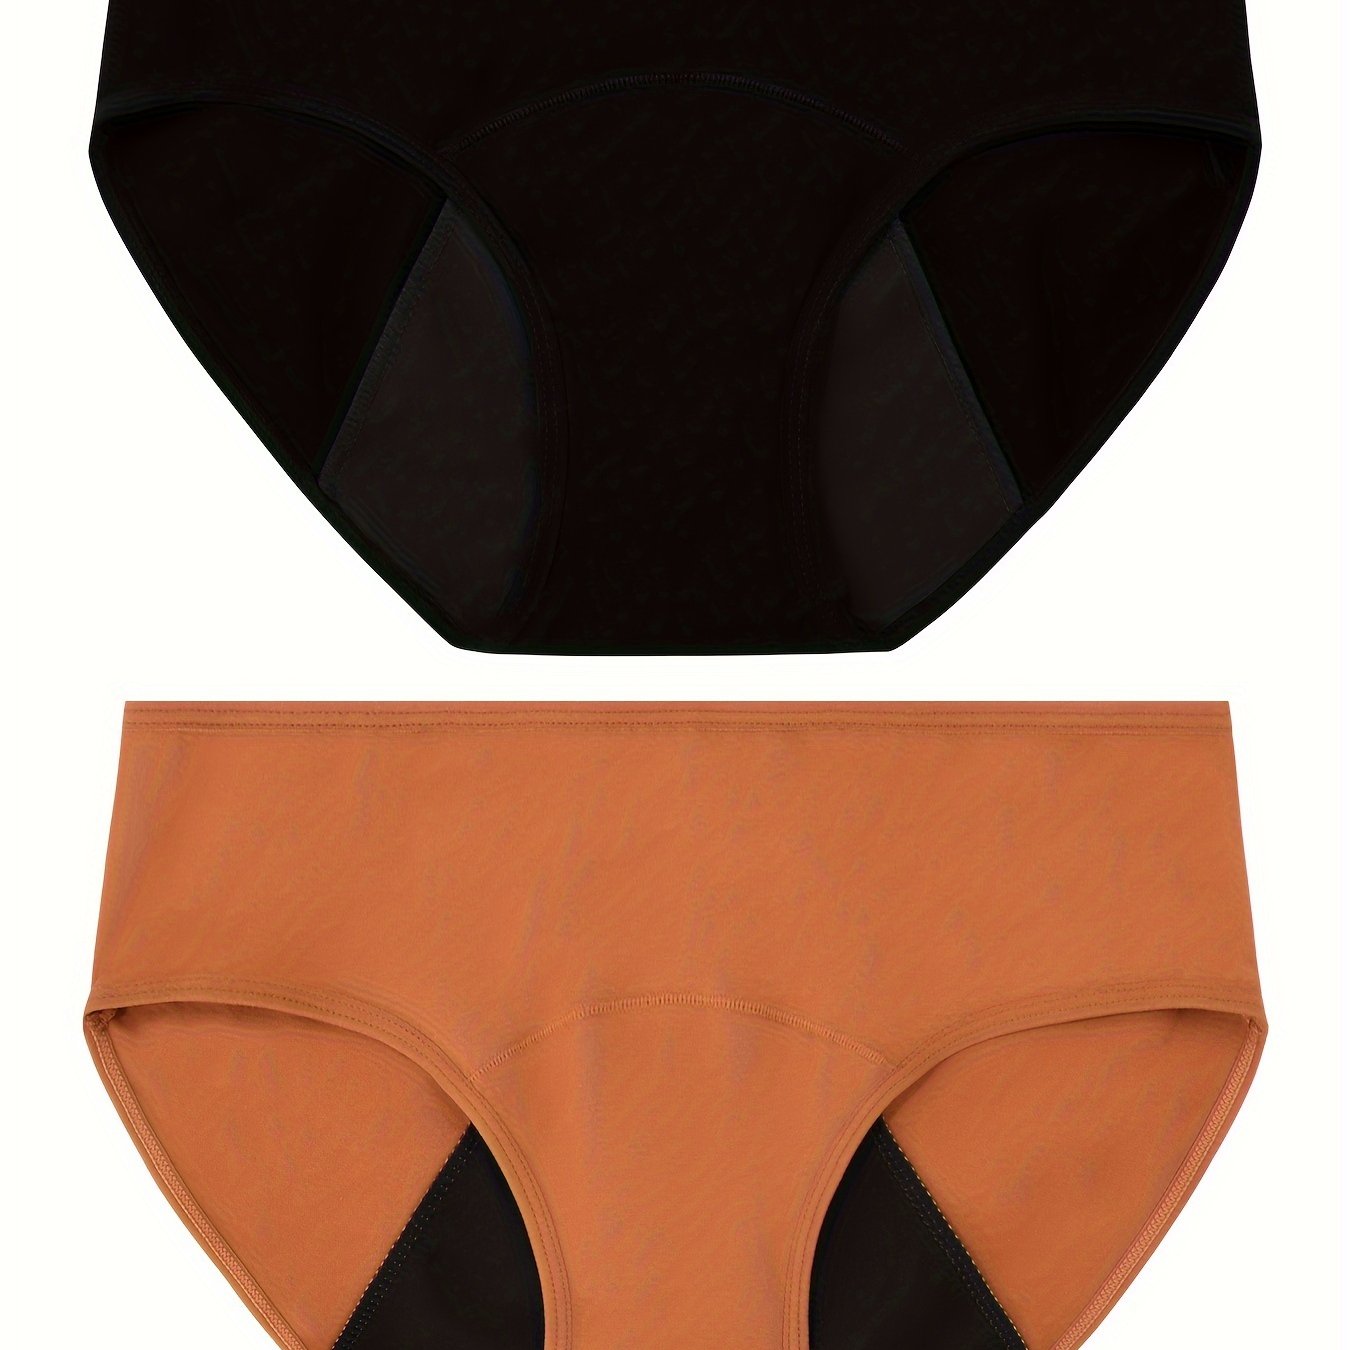 Period Underwear For Women,Women's Underwear High Waisted Cotton Briefs  Stretch Panties Soft Full Coverage Underpants(L,Black)